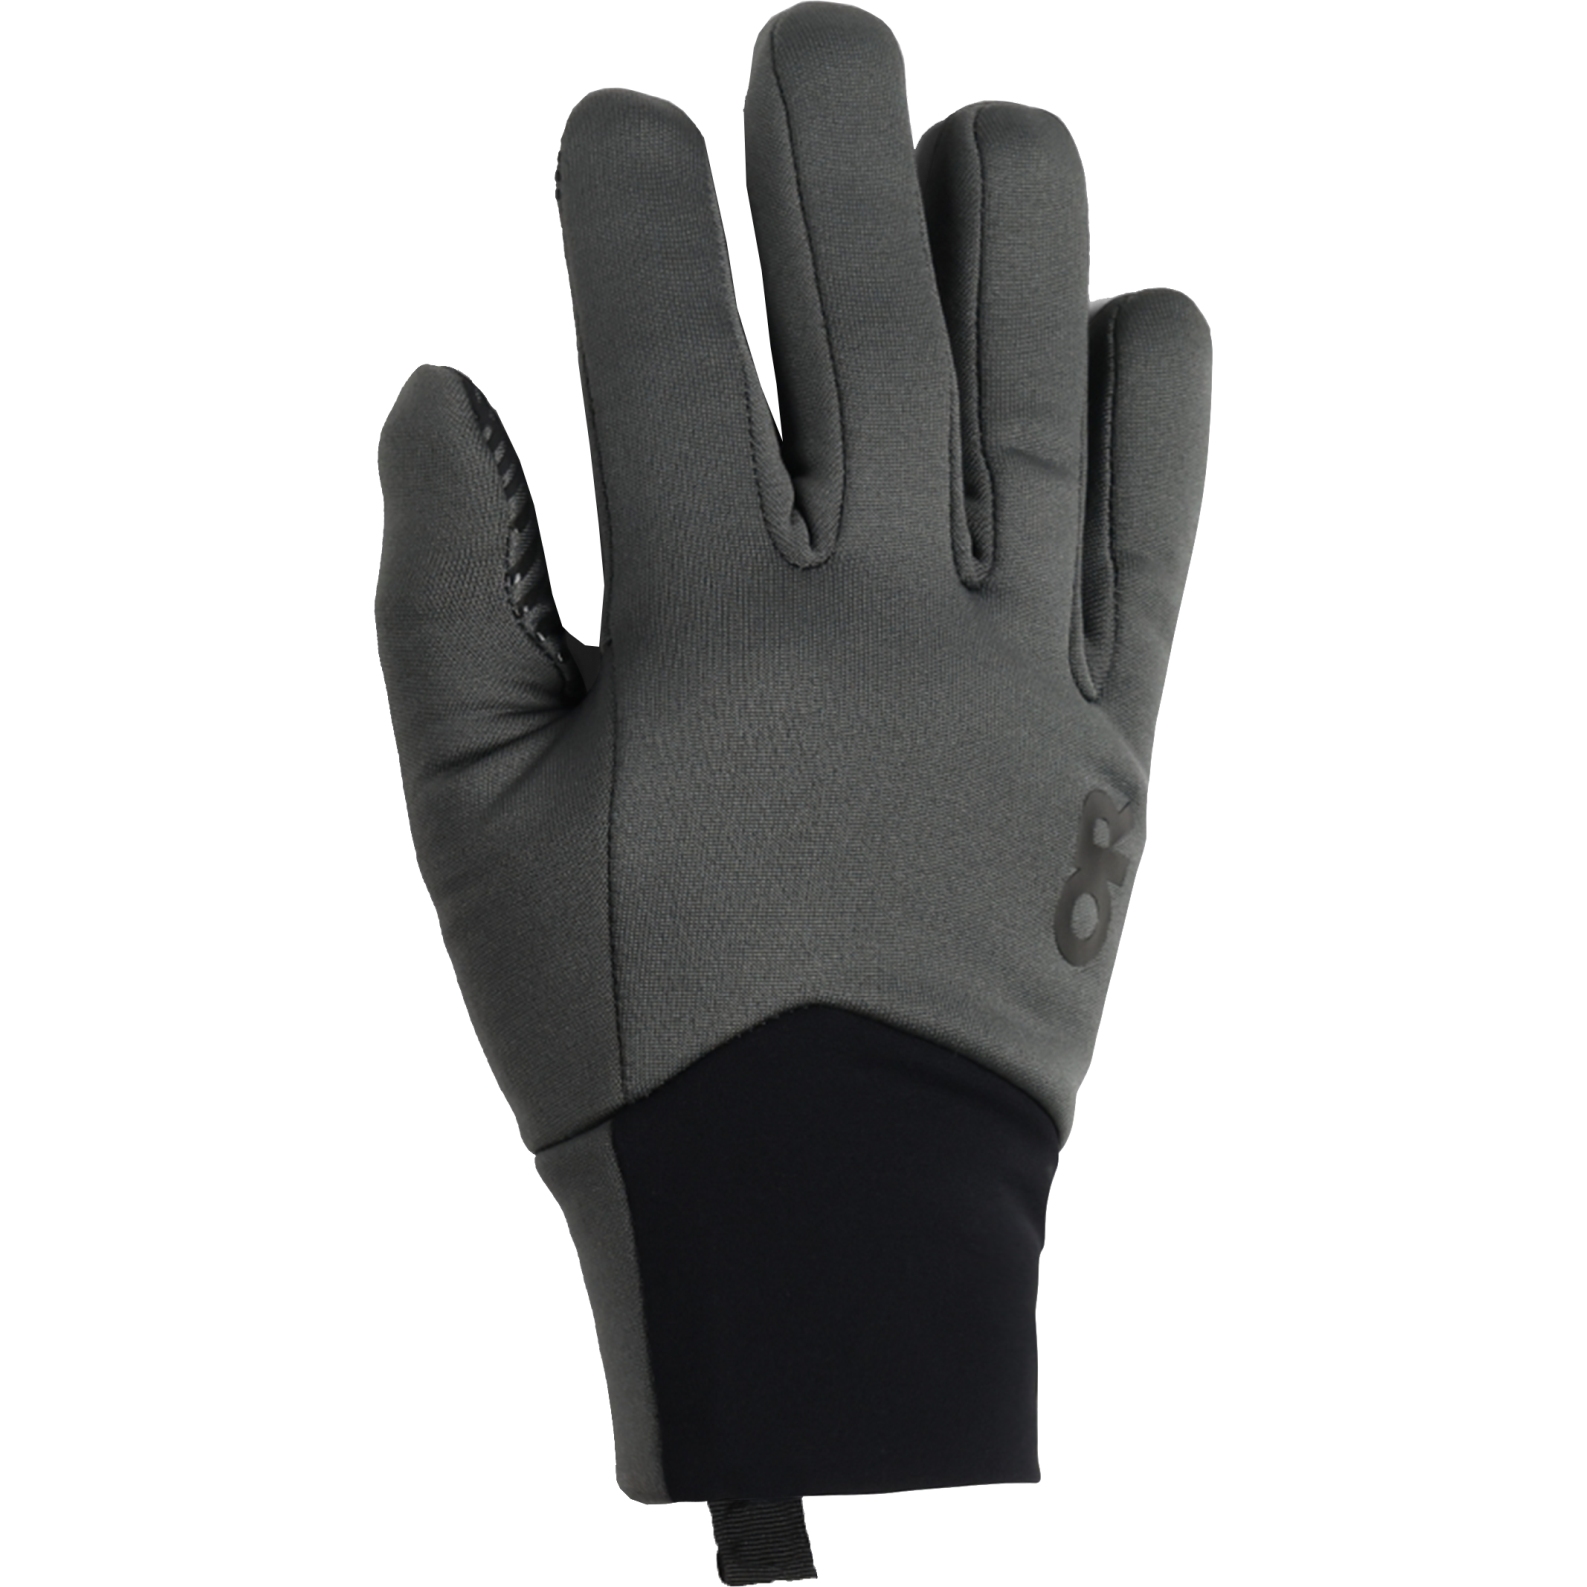 Produktbild von Outdoor Research Herren Vigor Midweight Sensor Handschuhe - charcoal